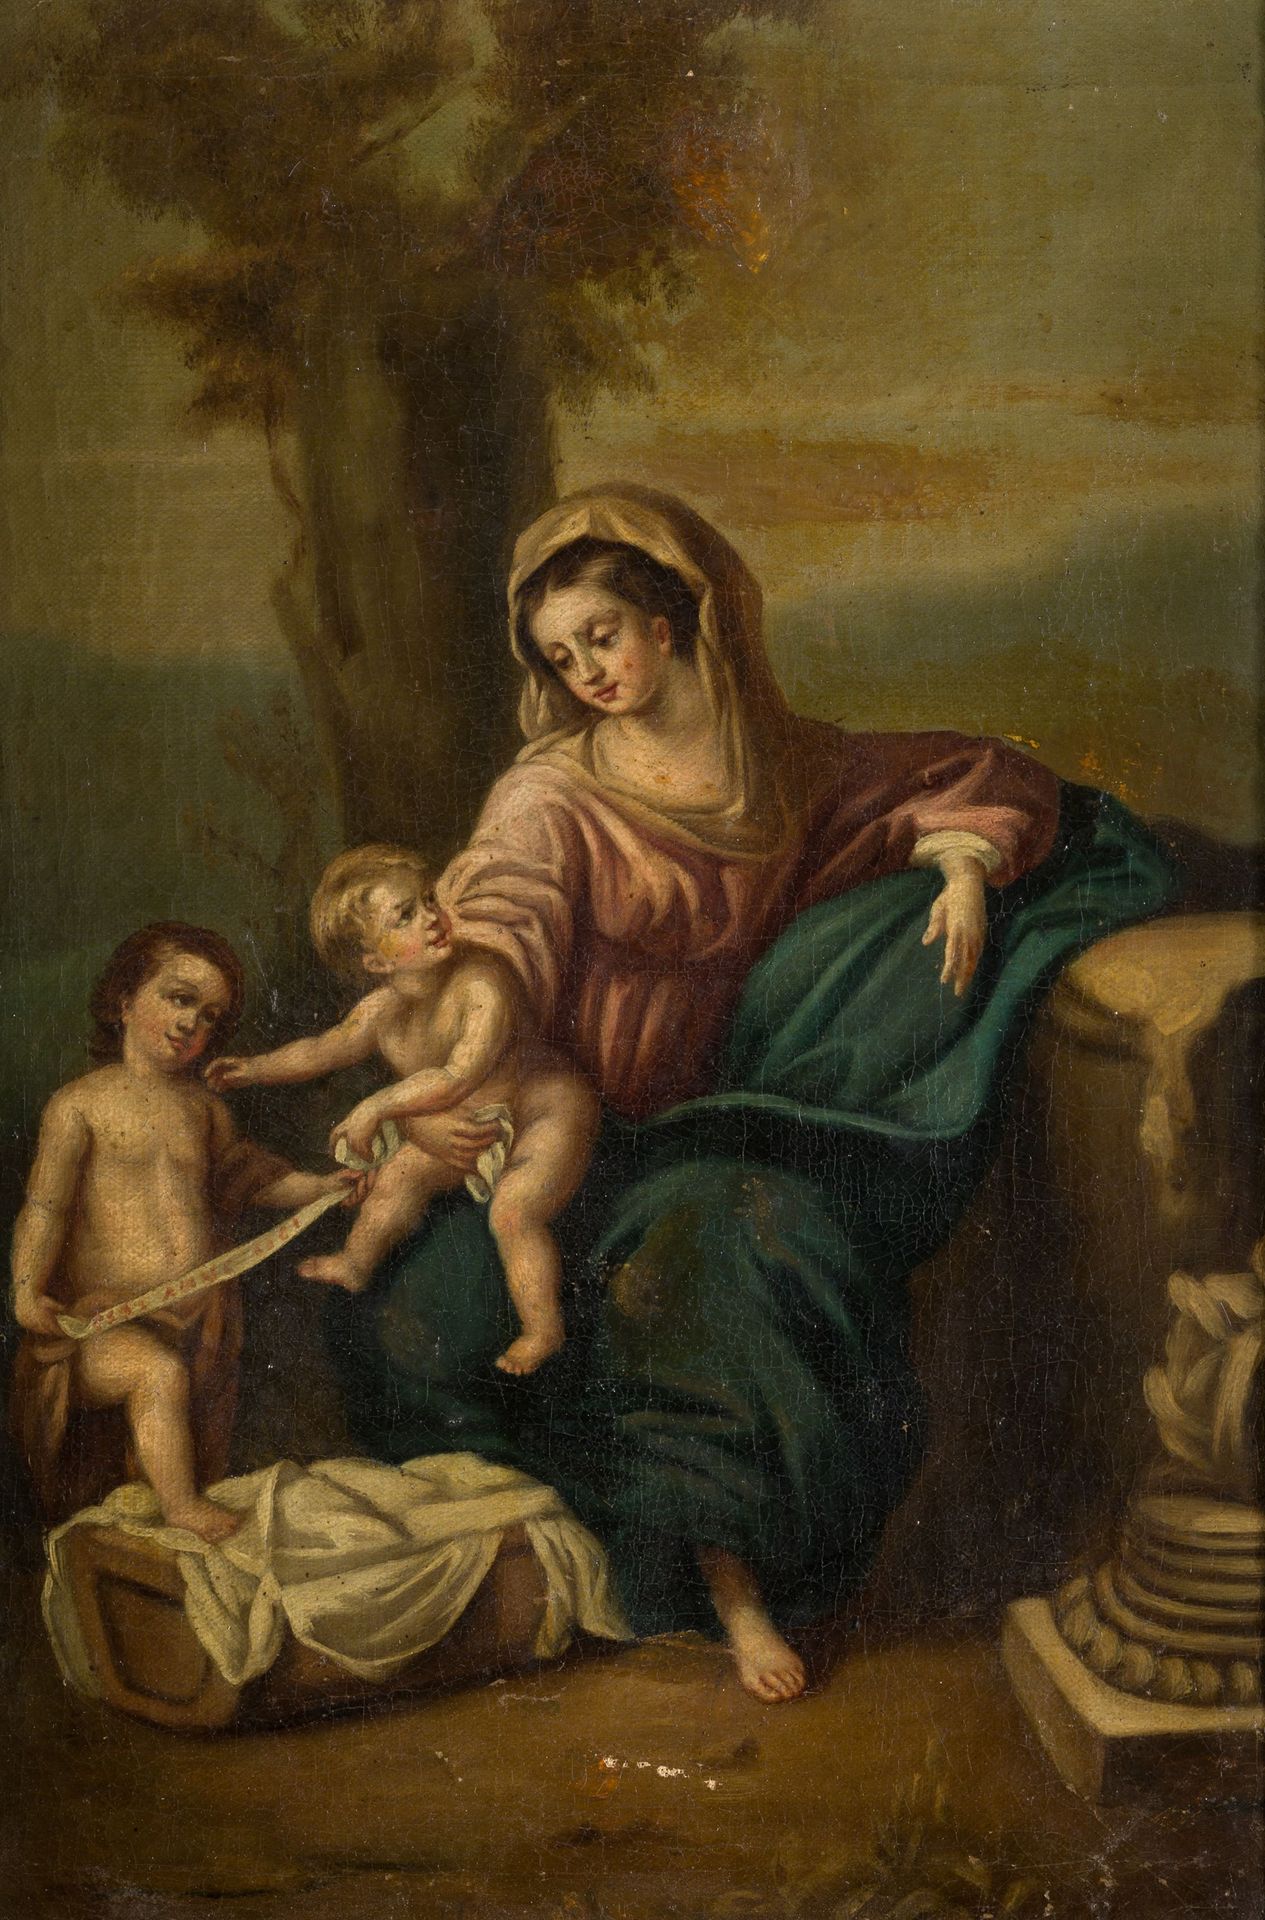 ANONYMOUS (C. 18th / C. 19th) “Holy Family" Óleo sobre lienzo. 40 x 28,5 cm